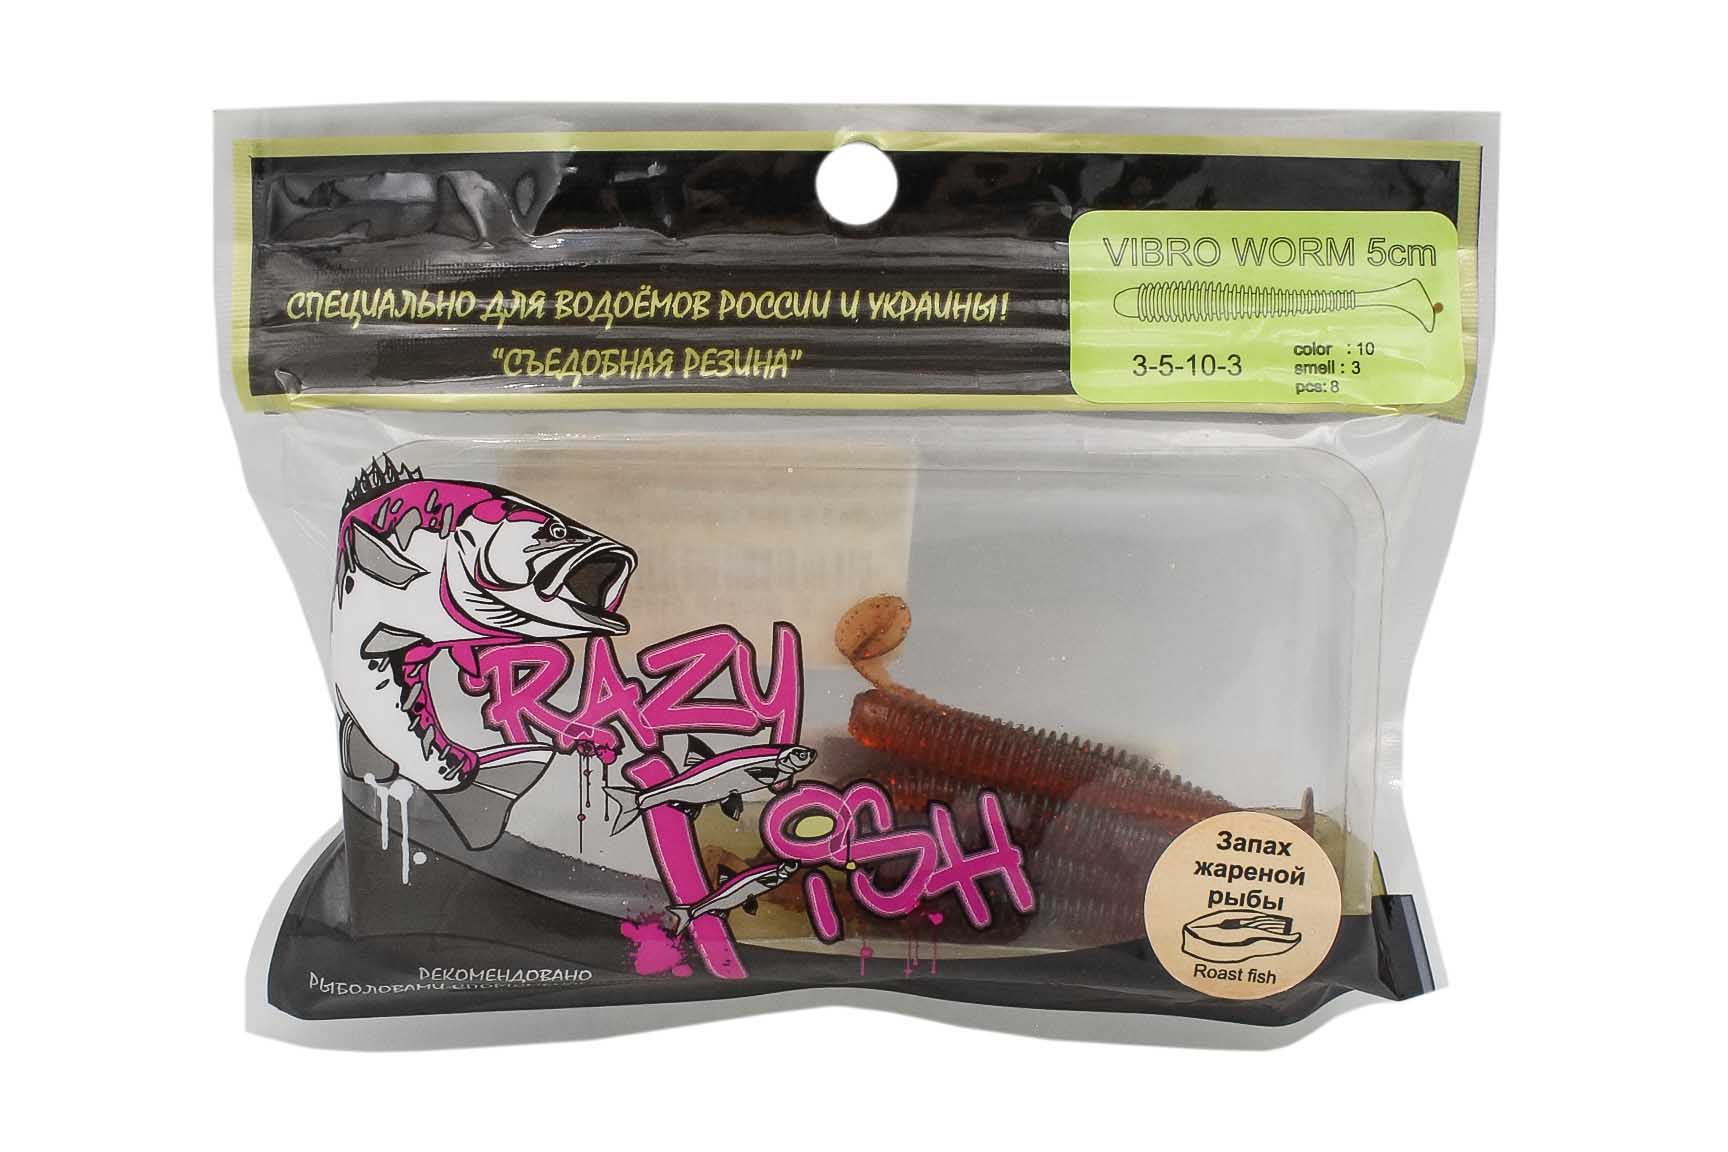 Приманка Crazy Fish Vibro worm 3-5-10-3 жареная рыба - фото 1